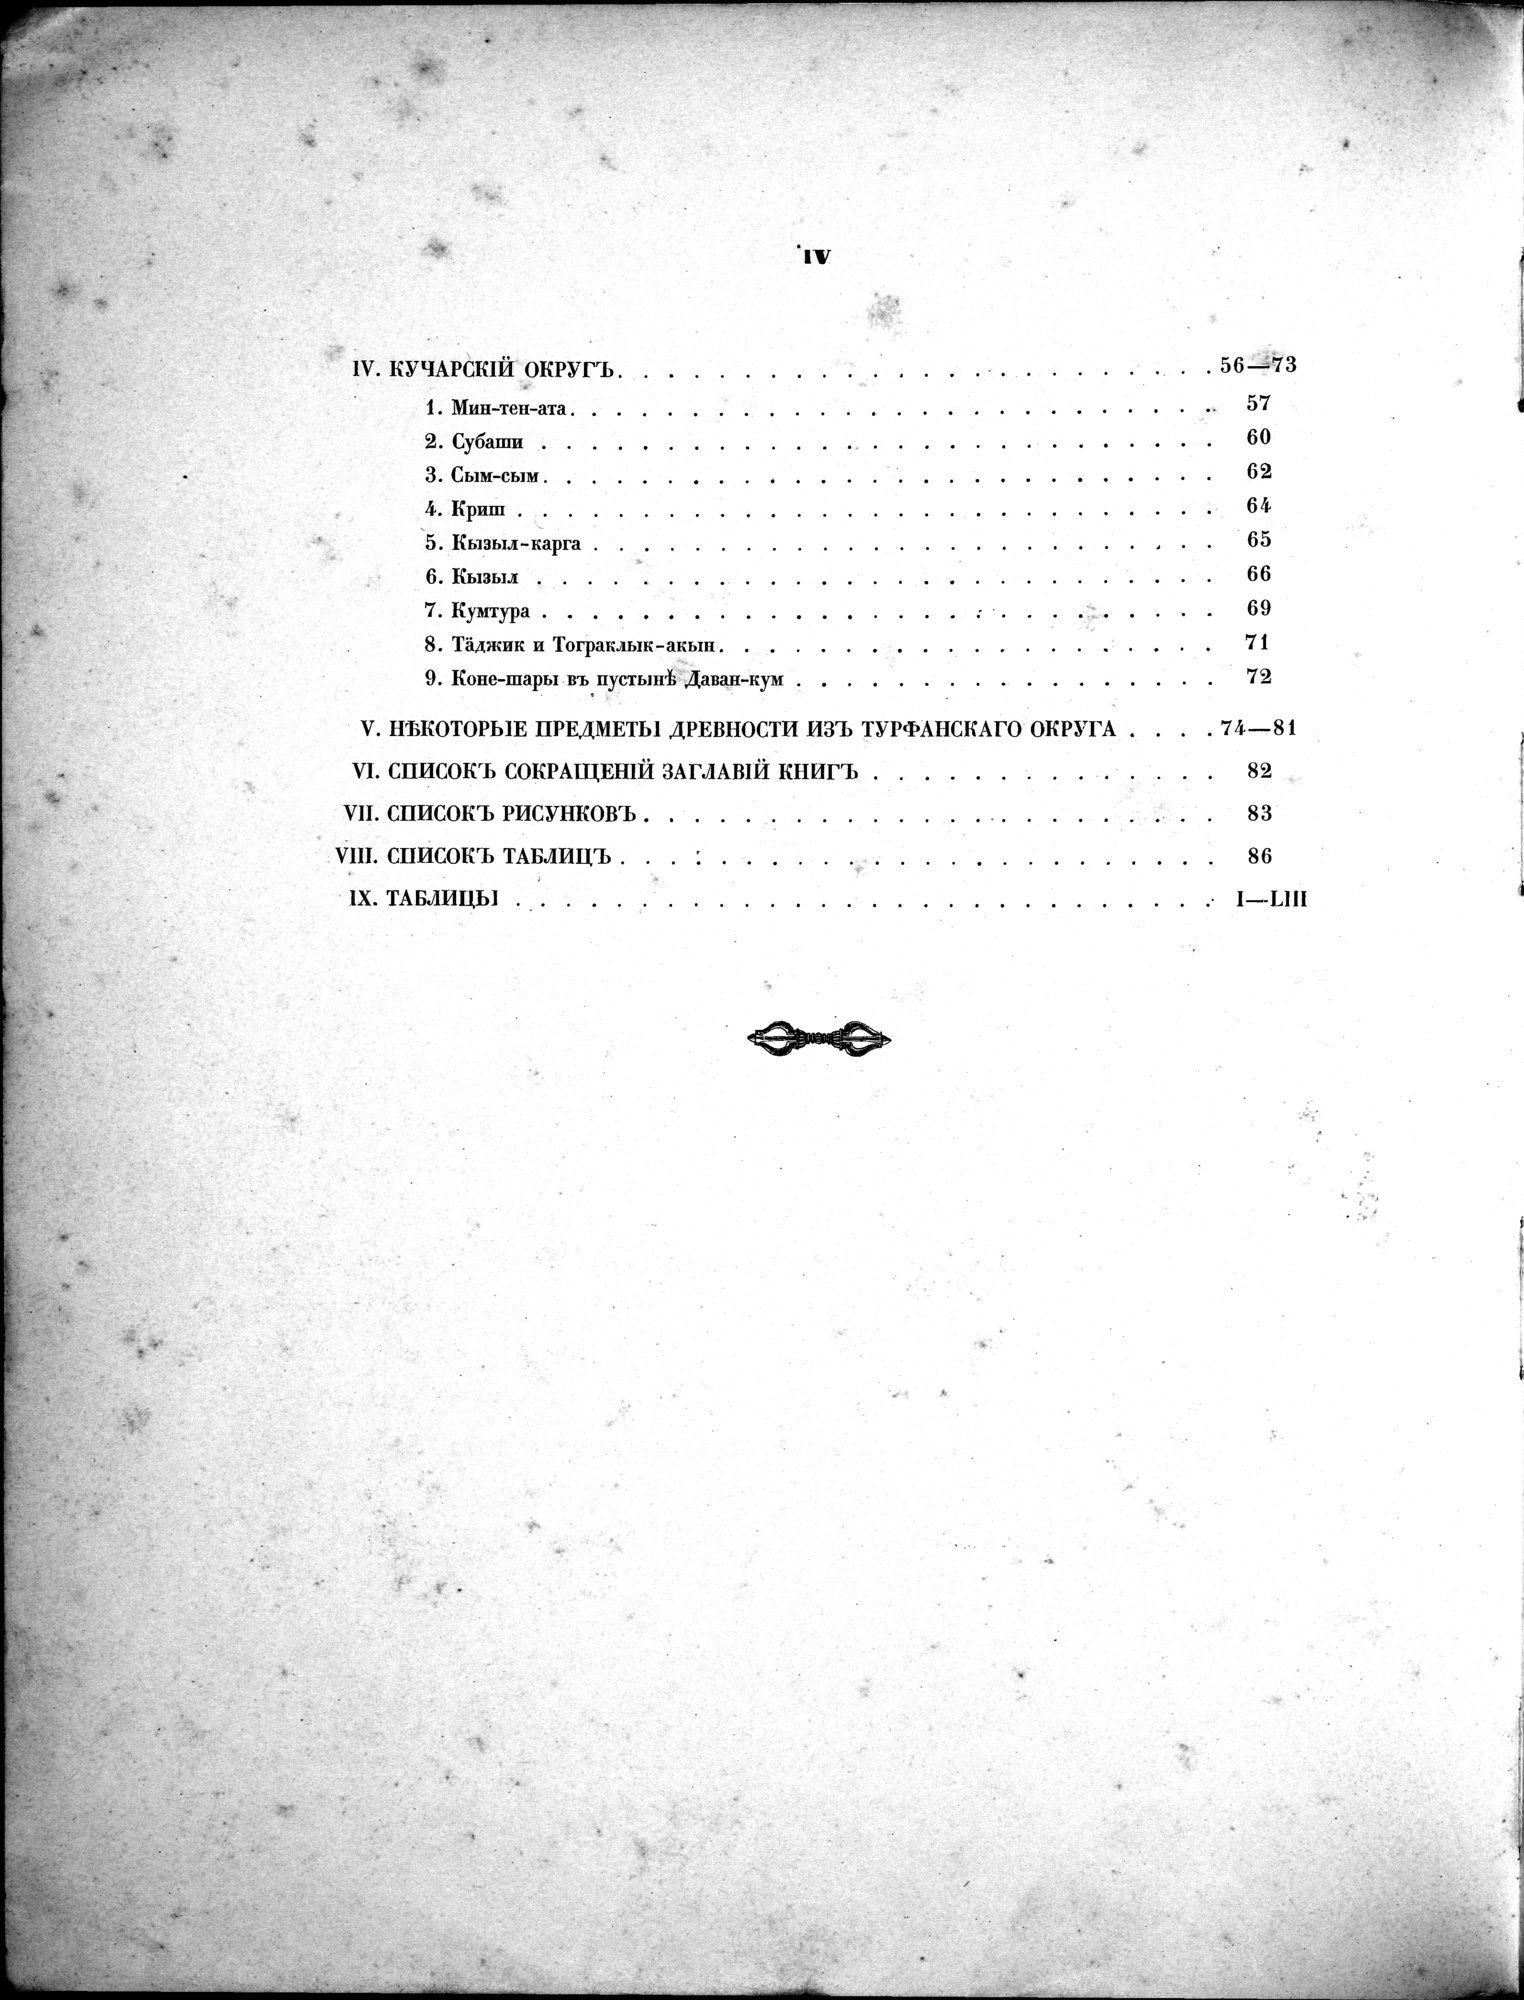 Russkaia Turkestanskaia Ekspeditsiia, 1909-1910 goda : vol.1 / Page 6 (Grayscale High Resolution Image)